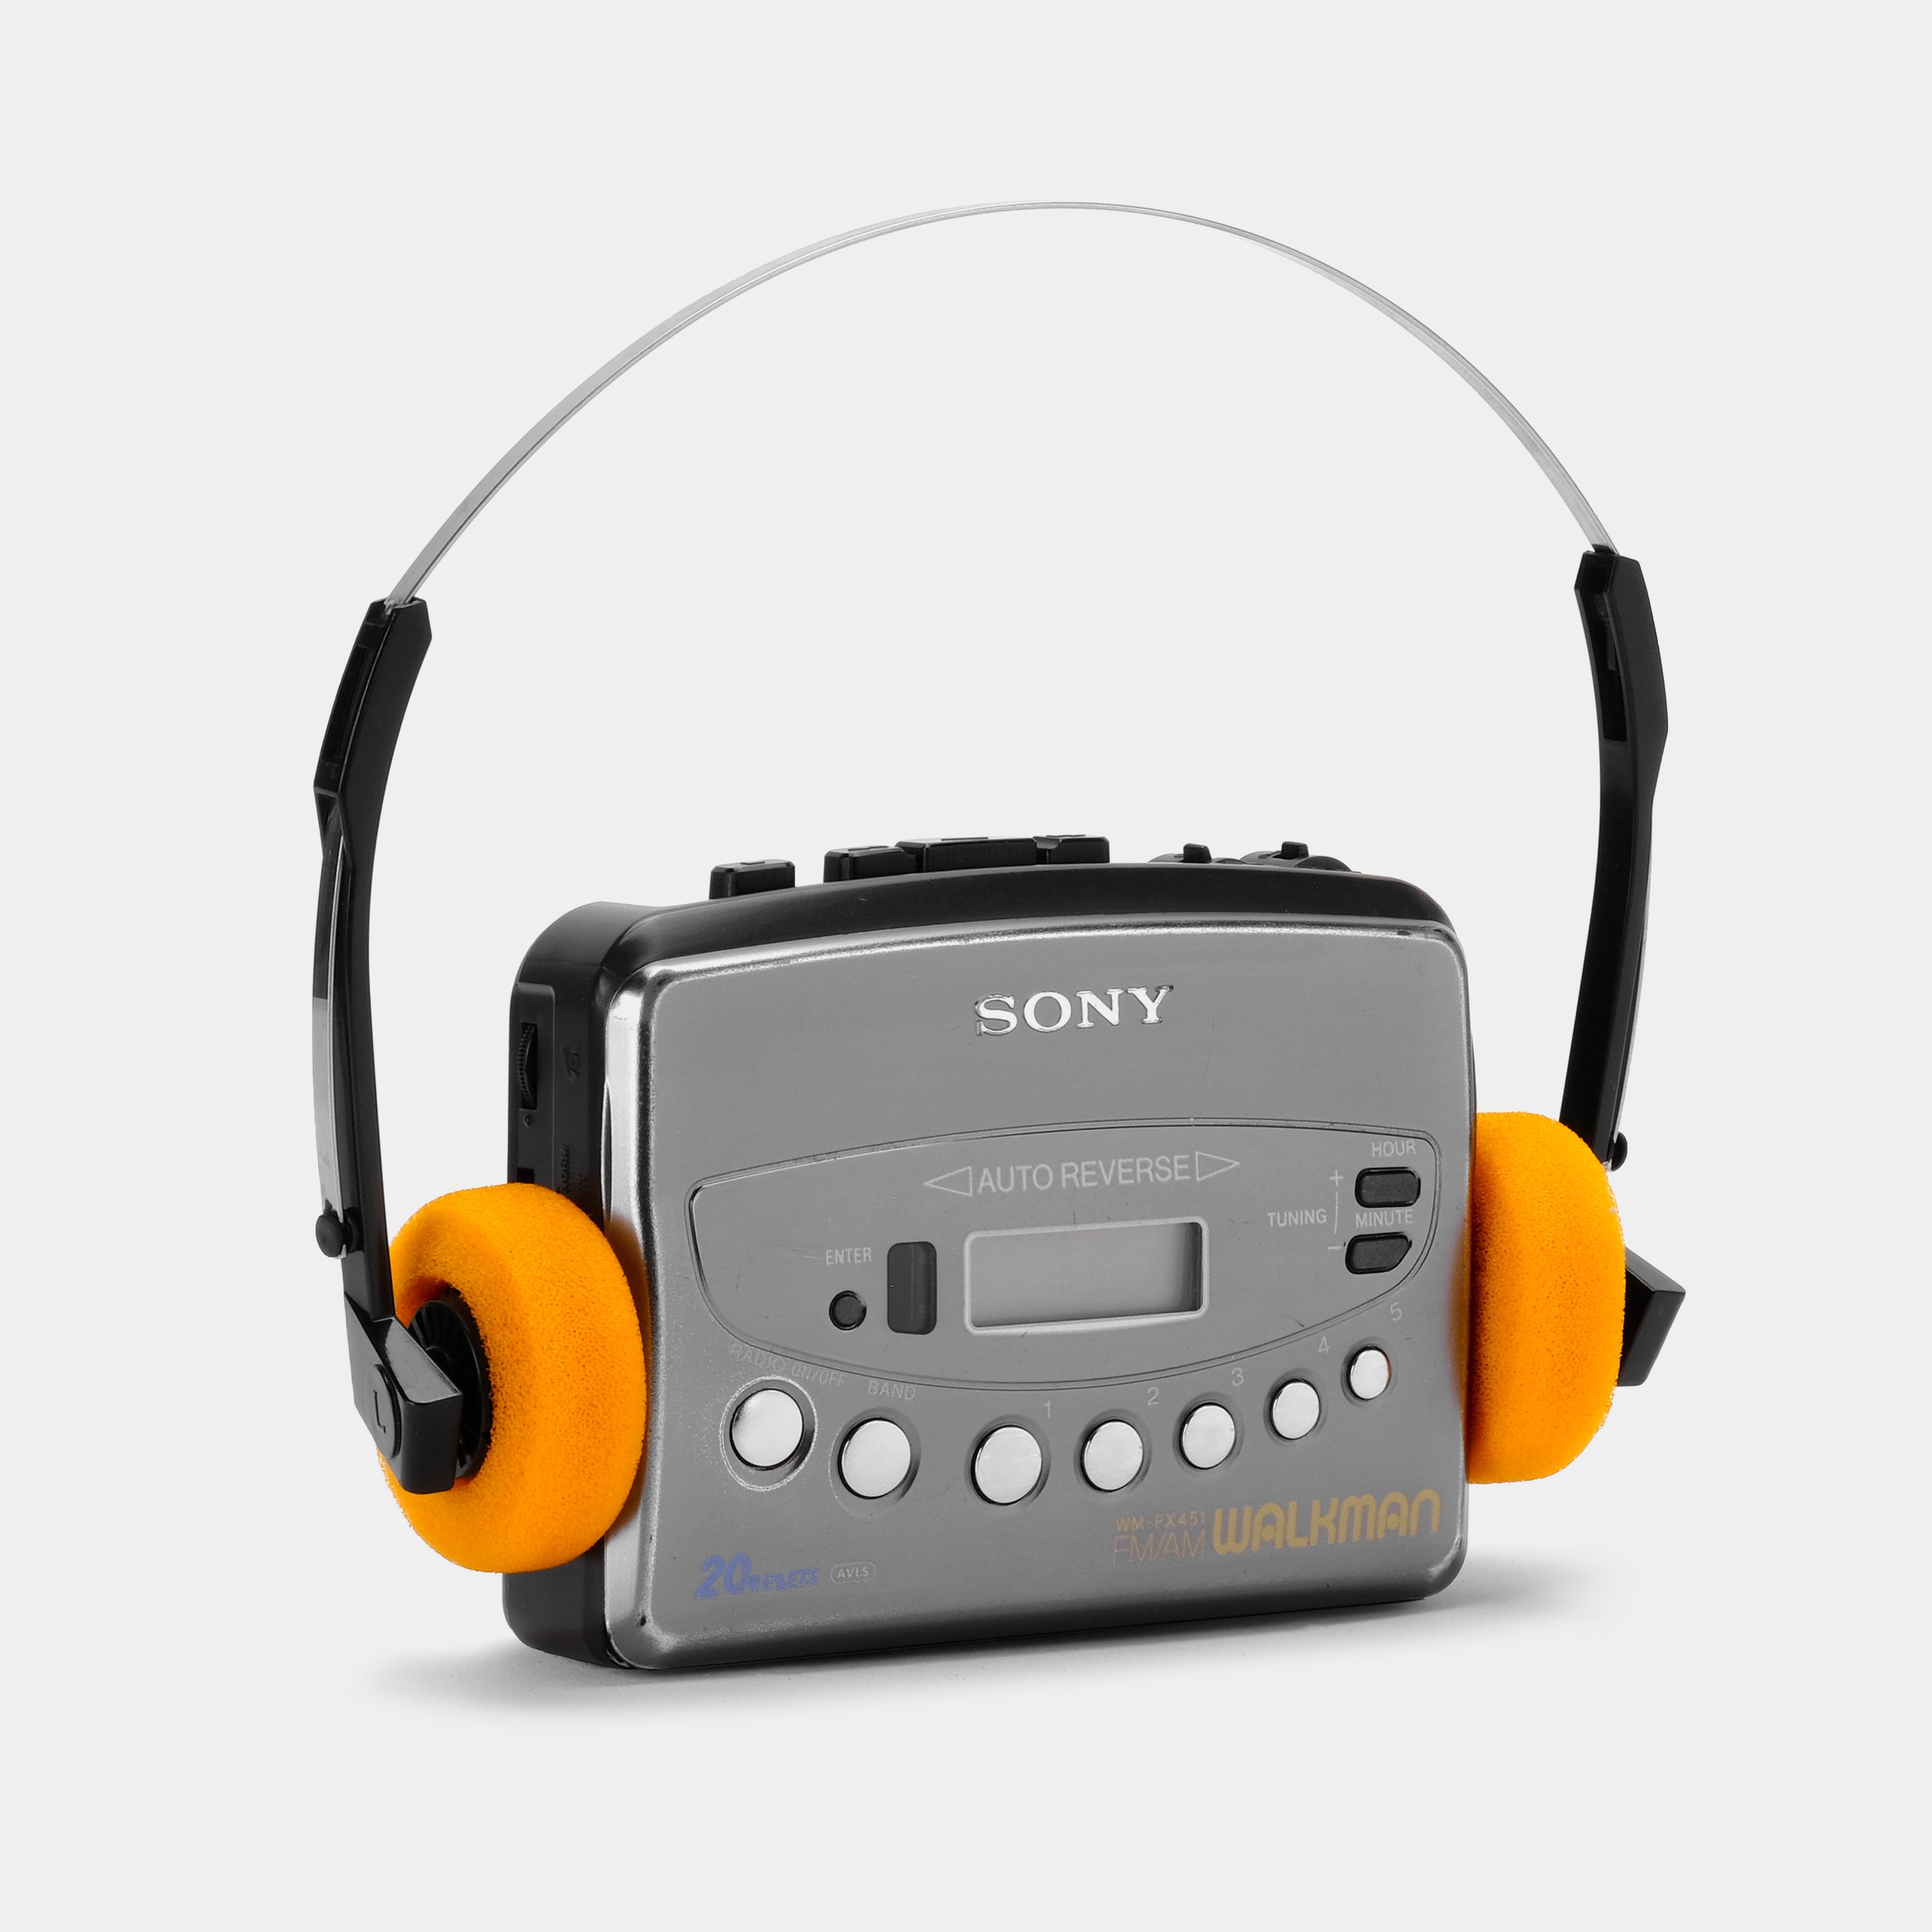 Sony Walkman WM-FX451 Auto Reverse AM/FM Portable Cassette Player